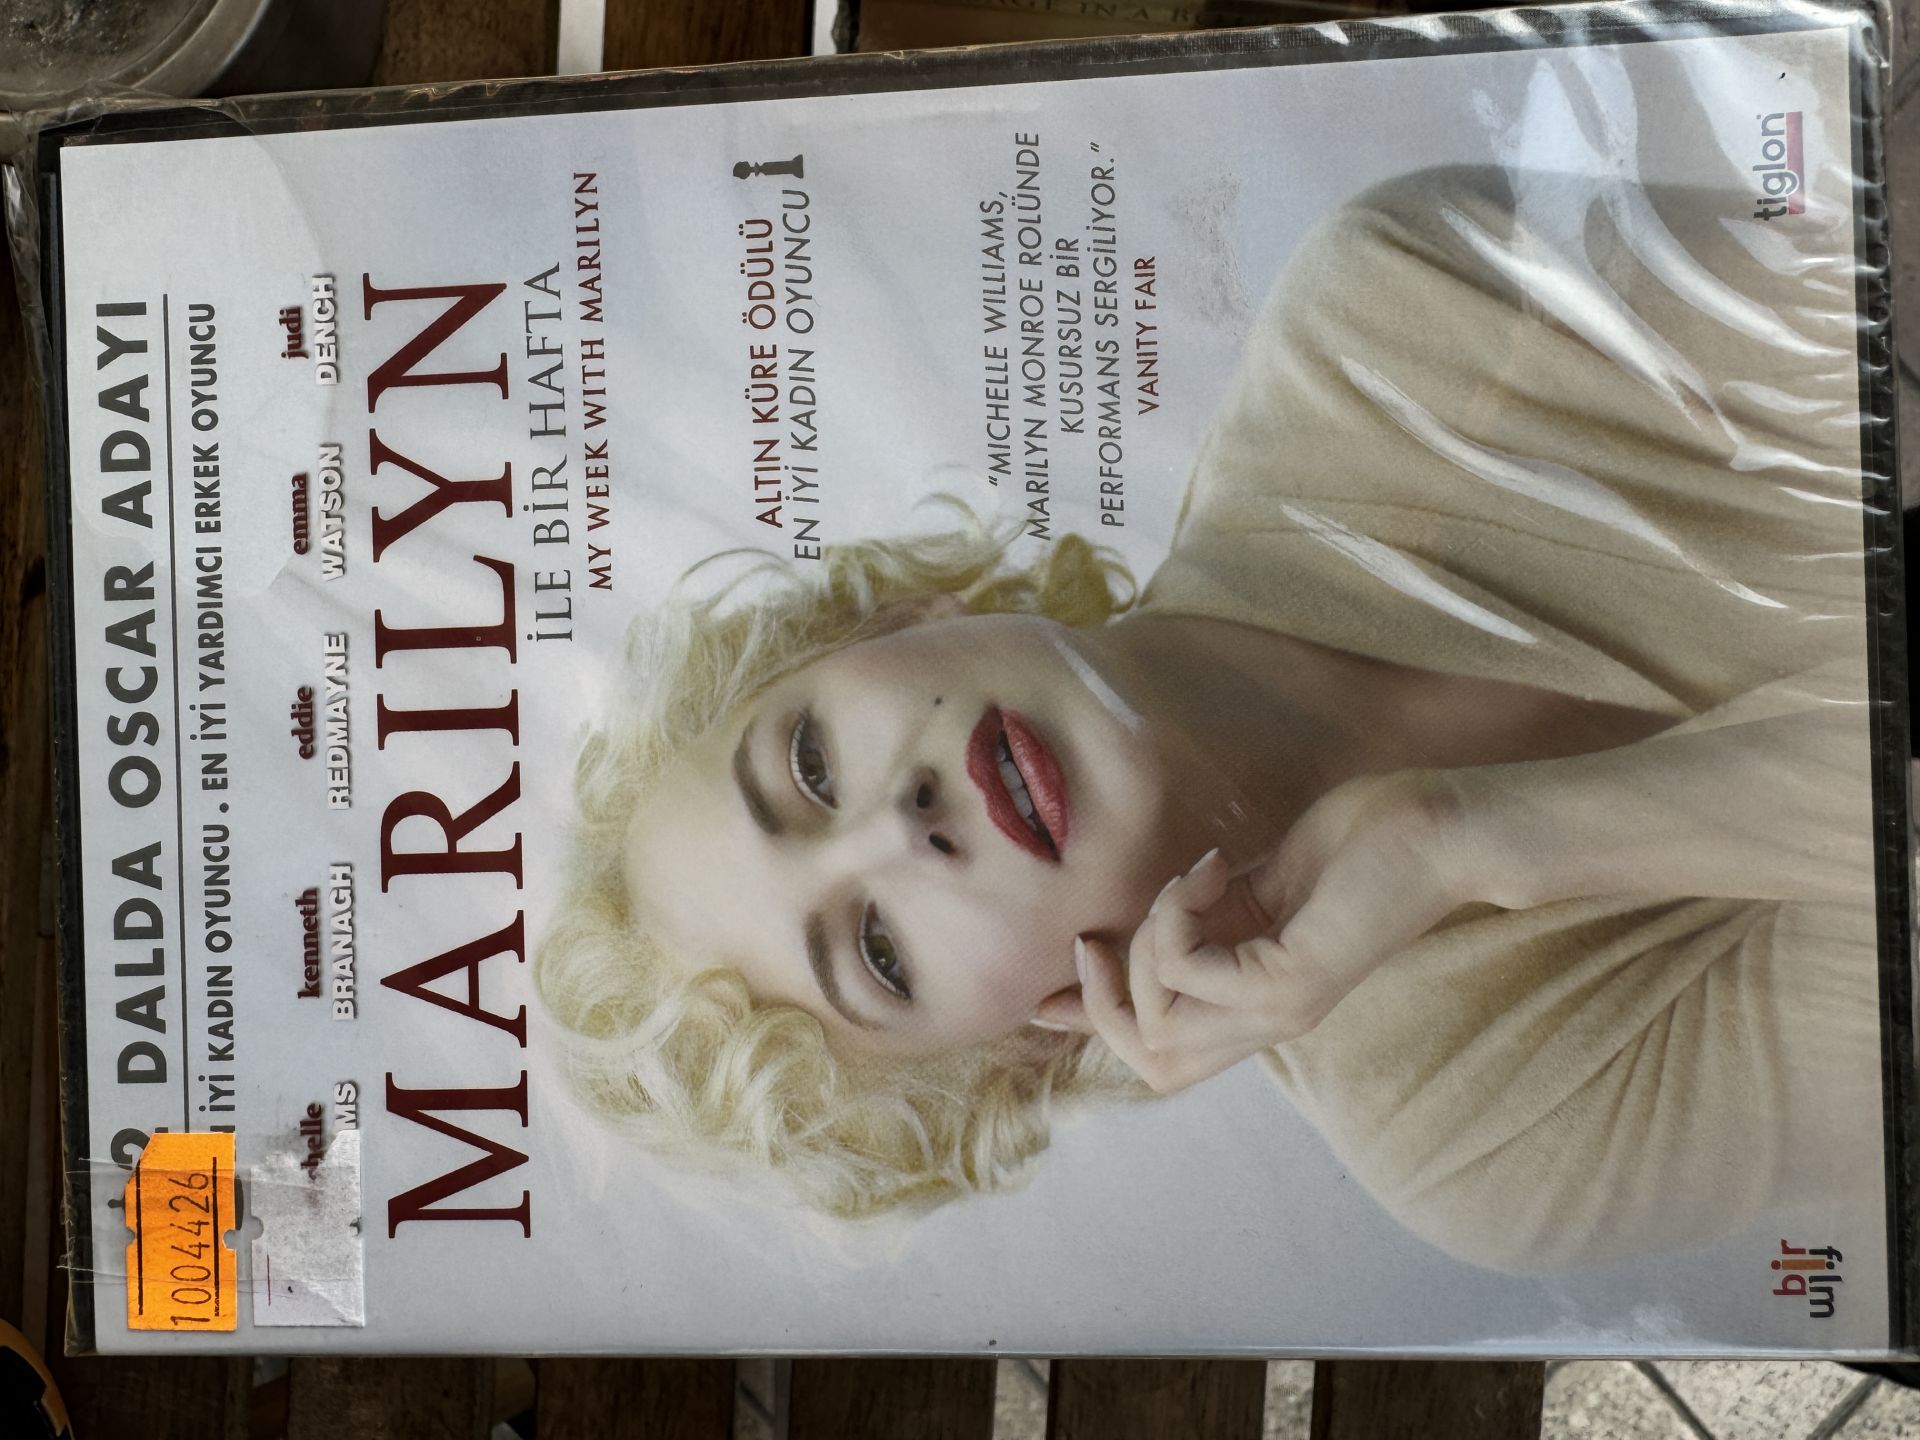 MY WEEK WITH MARILYN - MARILYN İLE BİR HAFTA - DVD